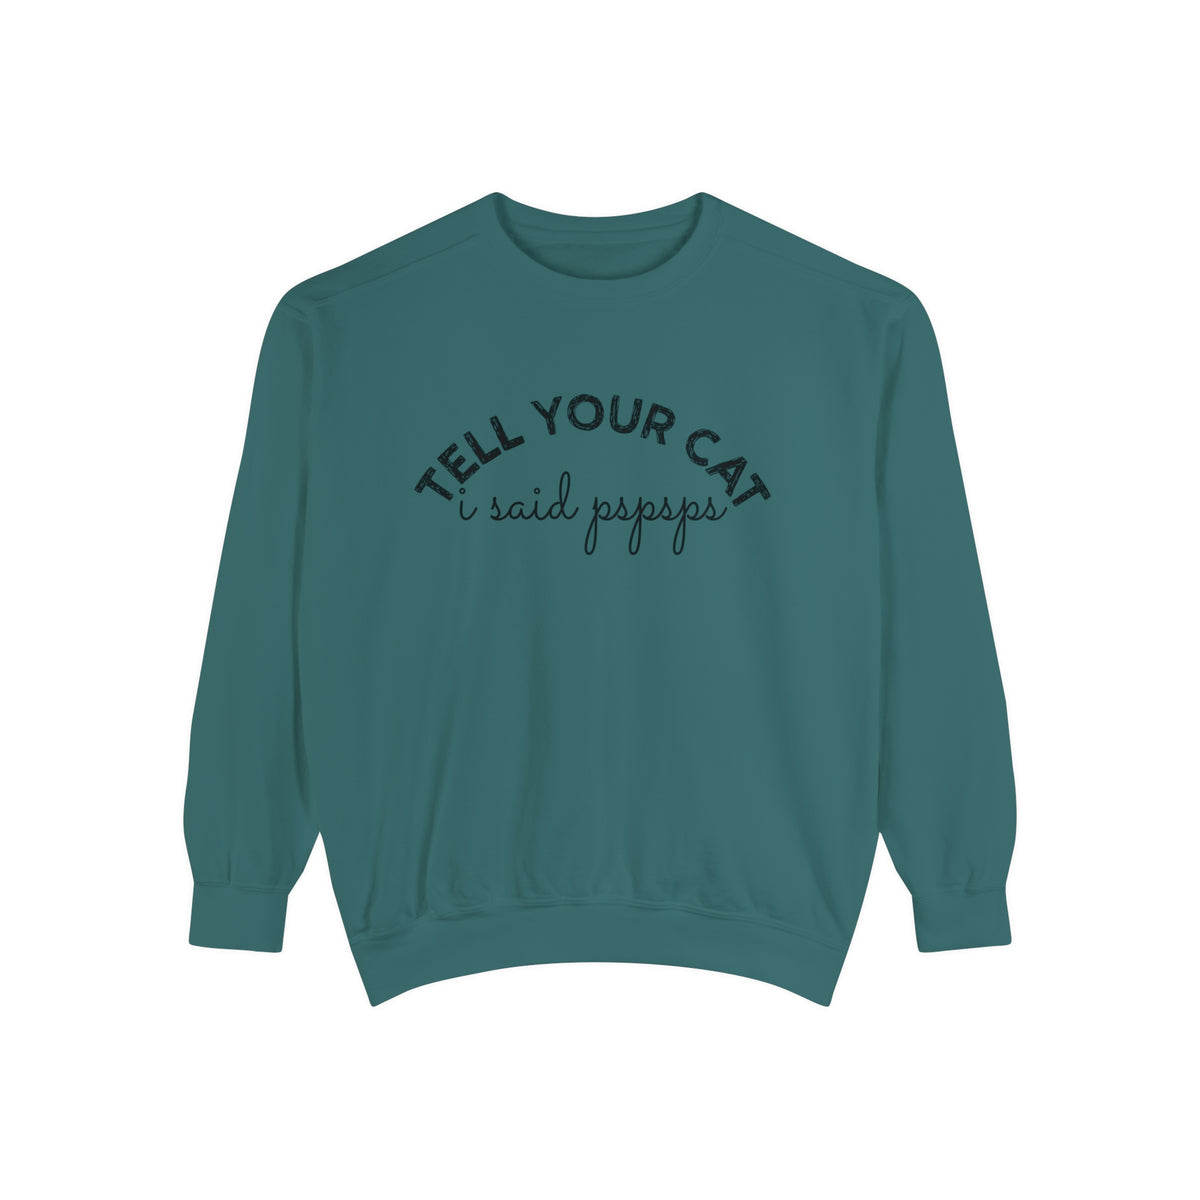 Tell your Cat I said Garment-Dyed Sweatshirt